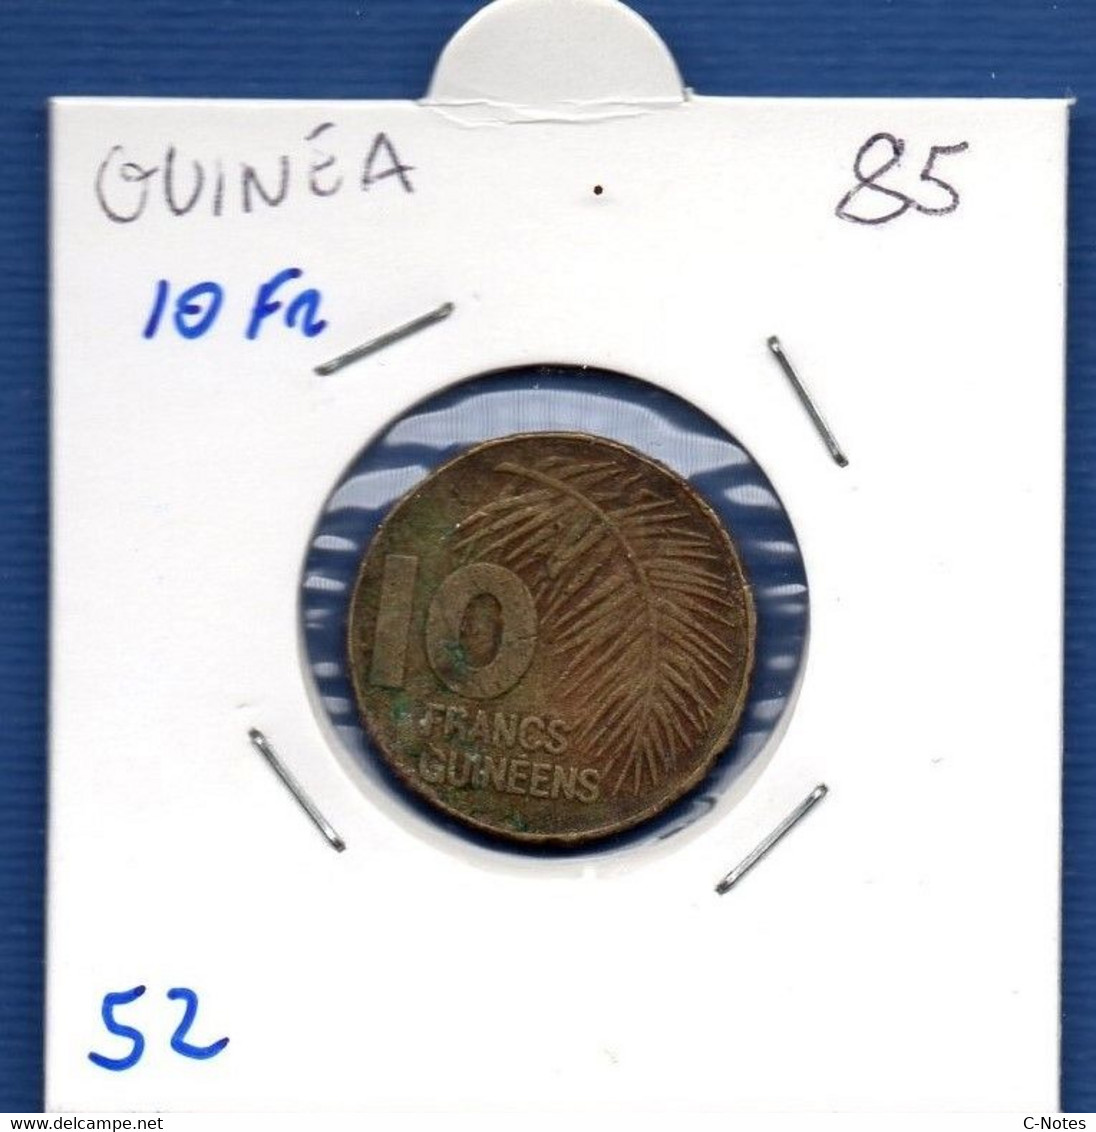 Guinea - 10 Francs 1985 -  See Photos -  Km 52 - Guinea